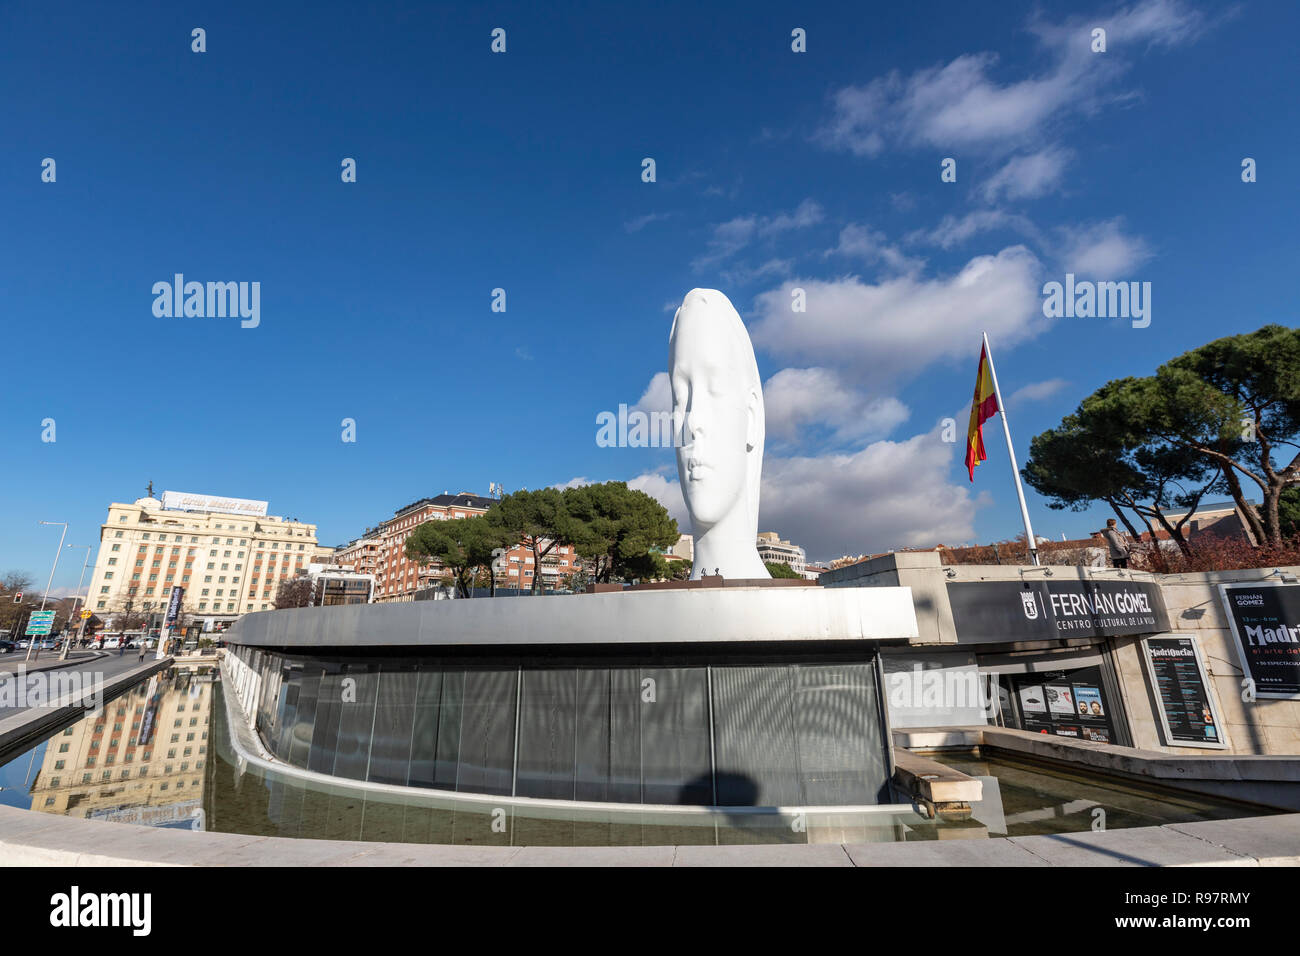 Julia, white marble sculpture by Jaume Plensa in Plaza Colon, Madrid, Spain Stock Photo